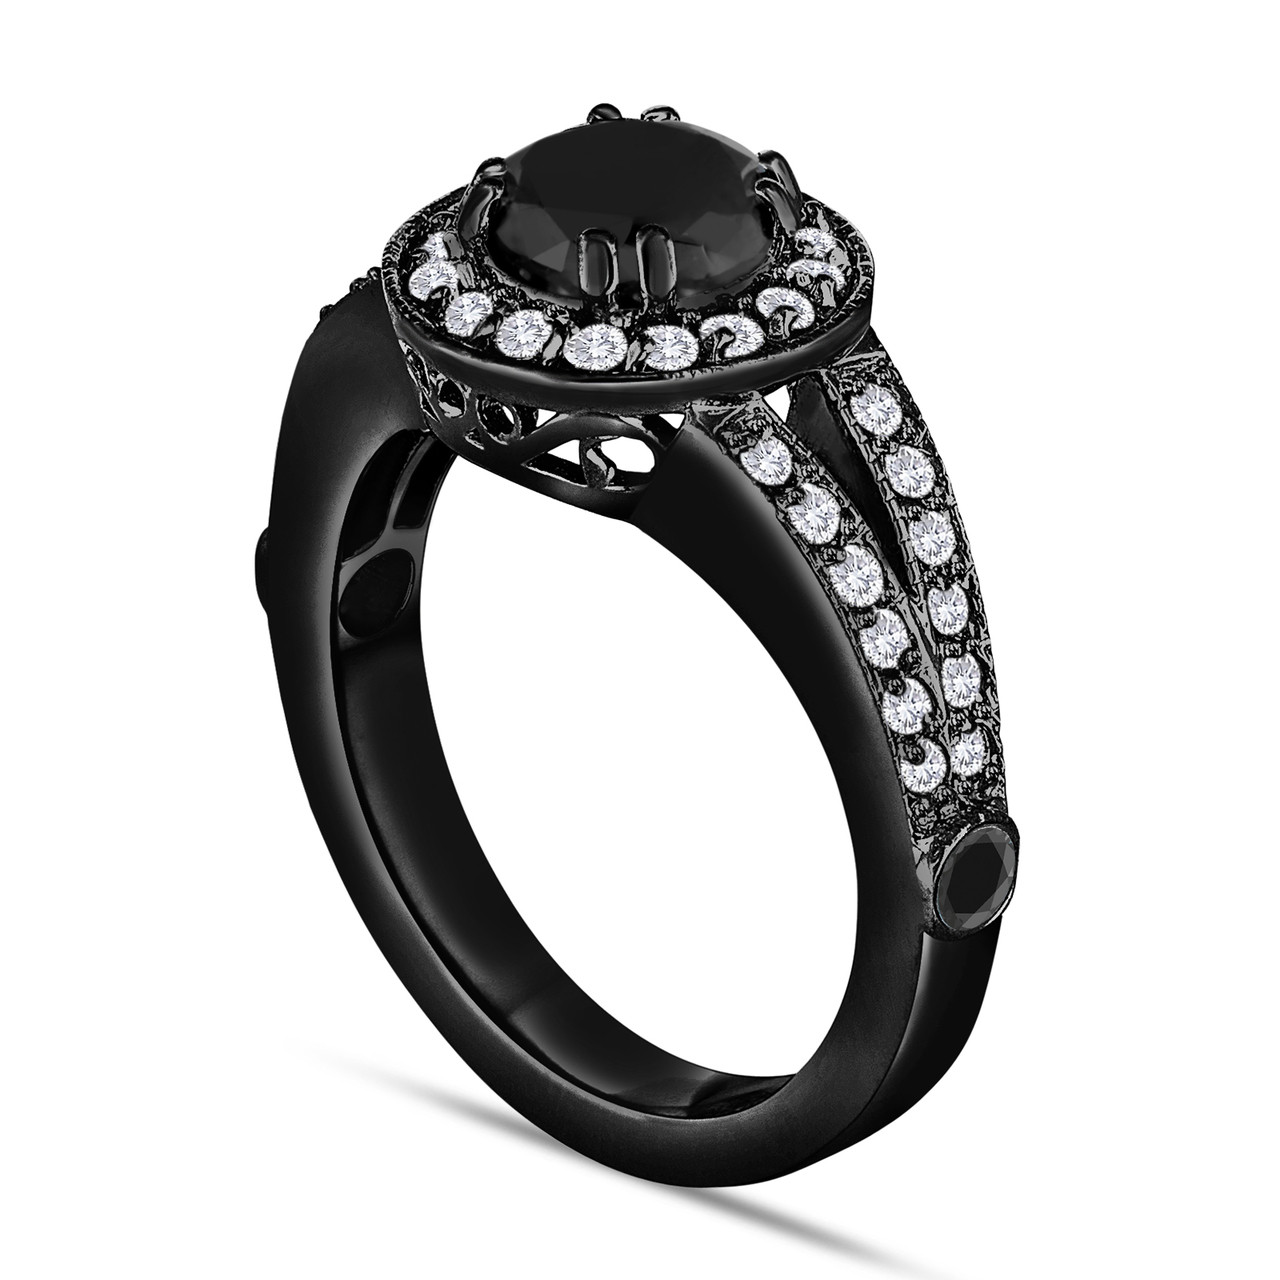  Black  Diamond Engagement  Ring  1 61 Carat 14k Black  Gold  